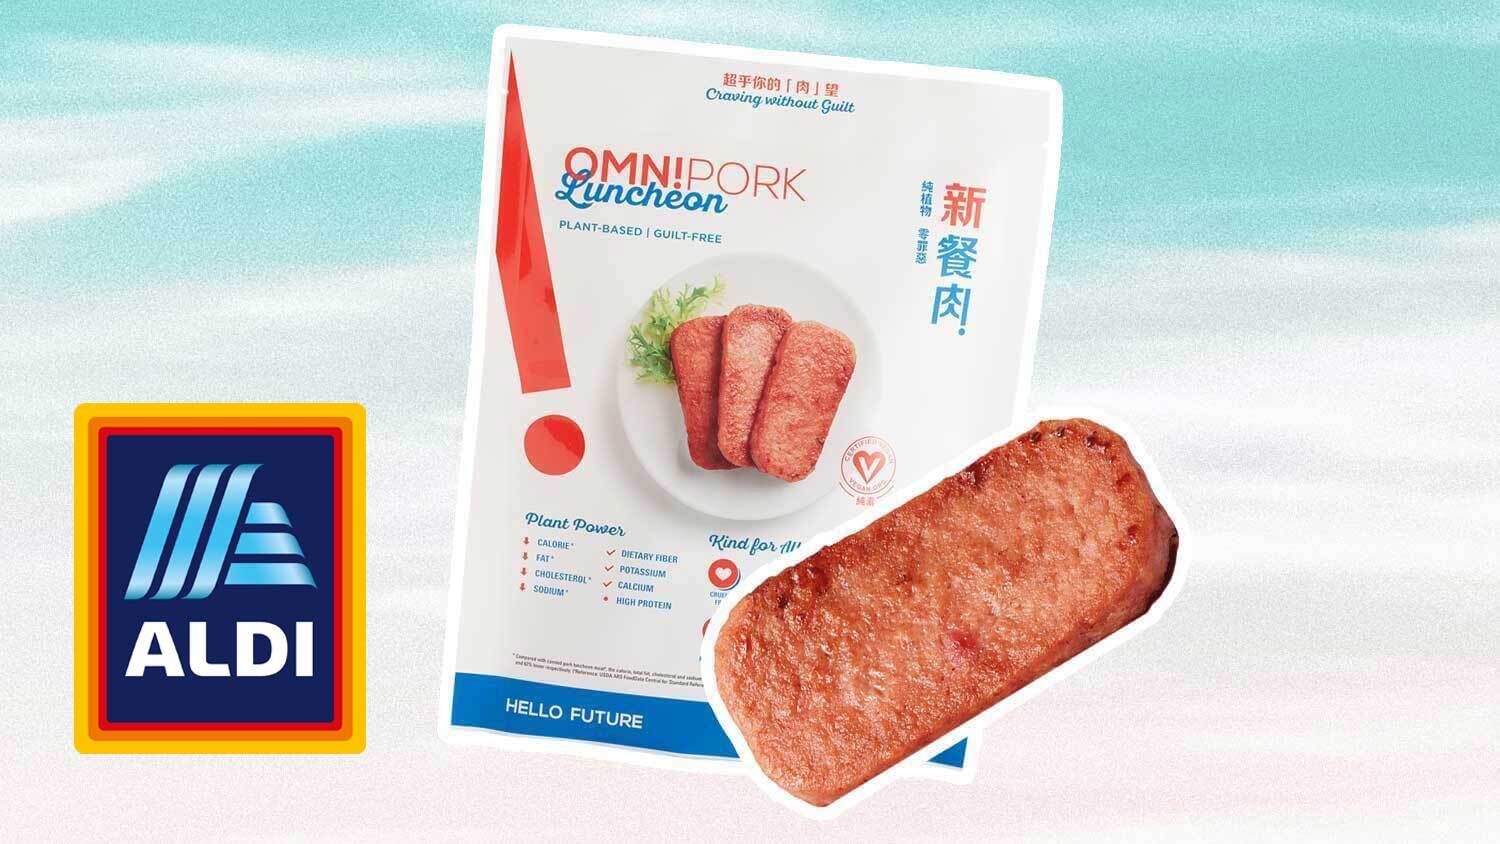 Vegan Pork Now Available at Aldi China